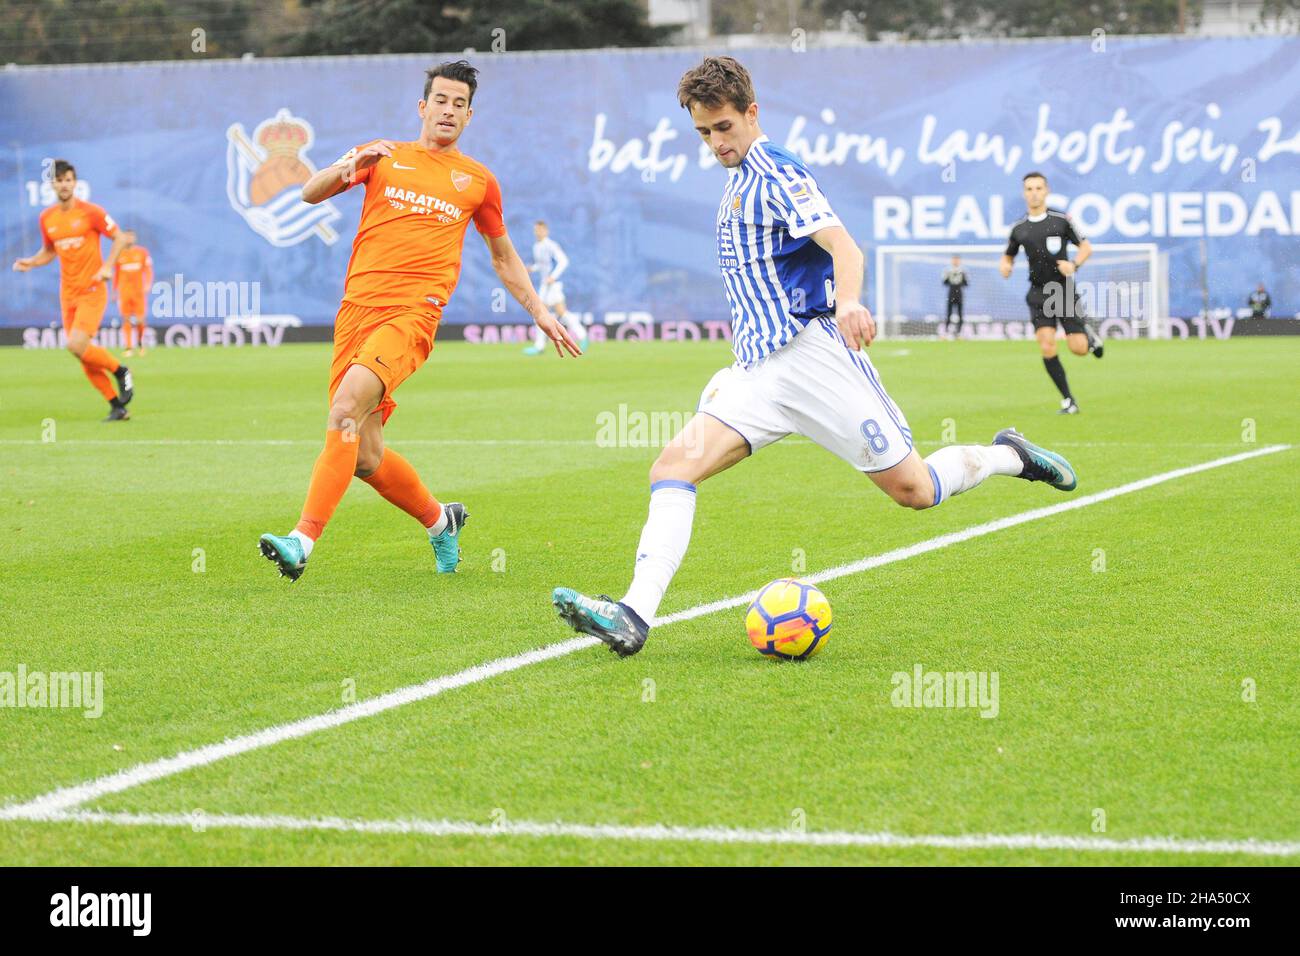 Real Sociedad's midfielder Adnan Januzaj (Credit Image: © Julen Pascual Gonzalez) Stock Photo